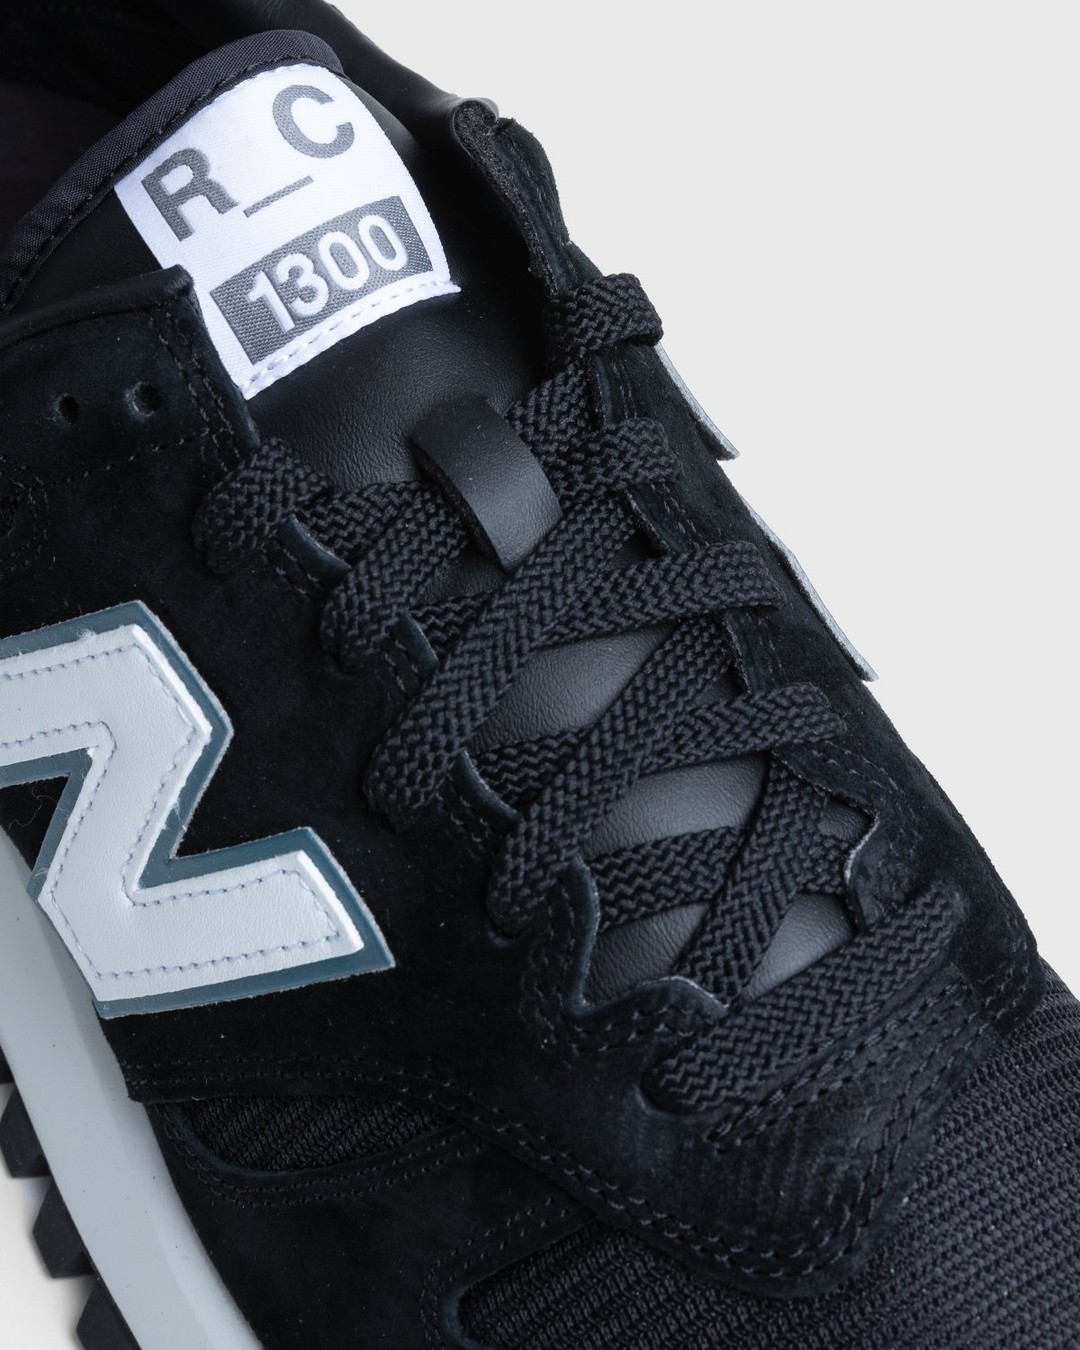 New Balance x Tokyo Design Studio Niobium – MS1300BG Black - Sneakers - Black - Image 5